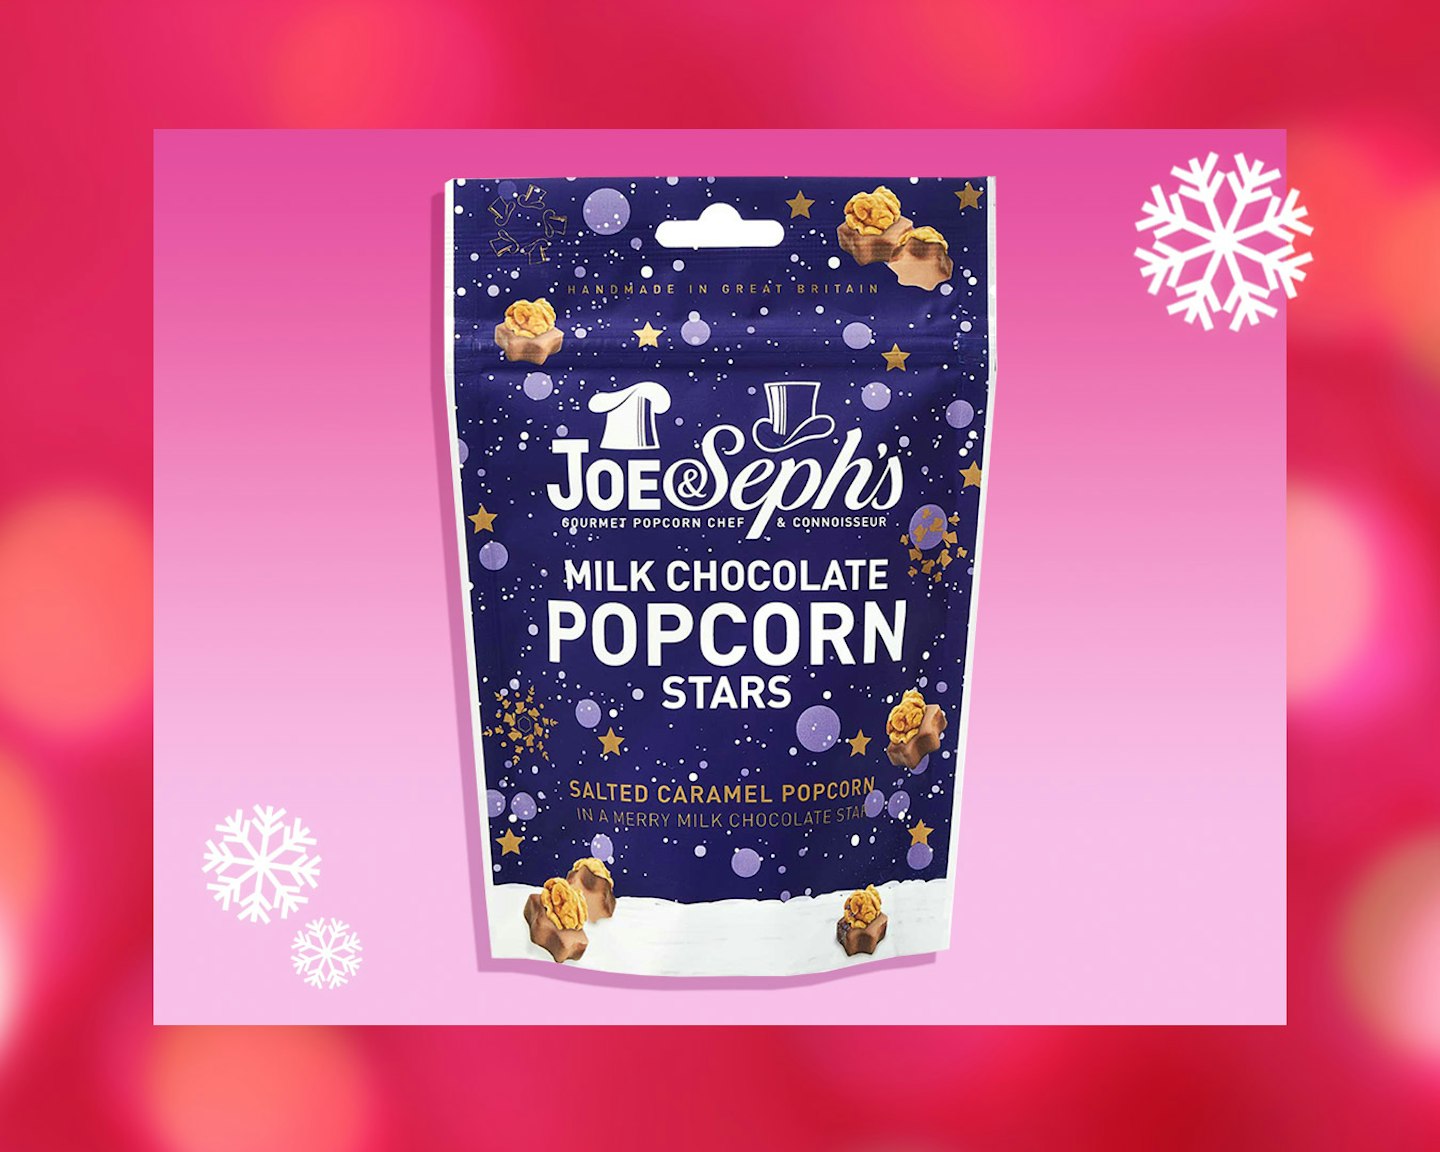 Joe & Seph's Milk Chocolate Popcorn Stars